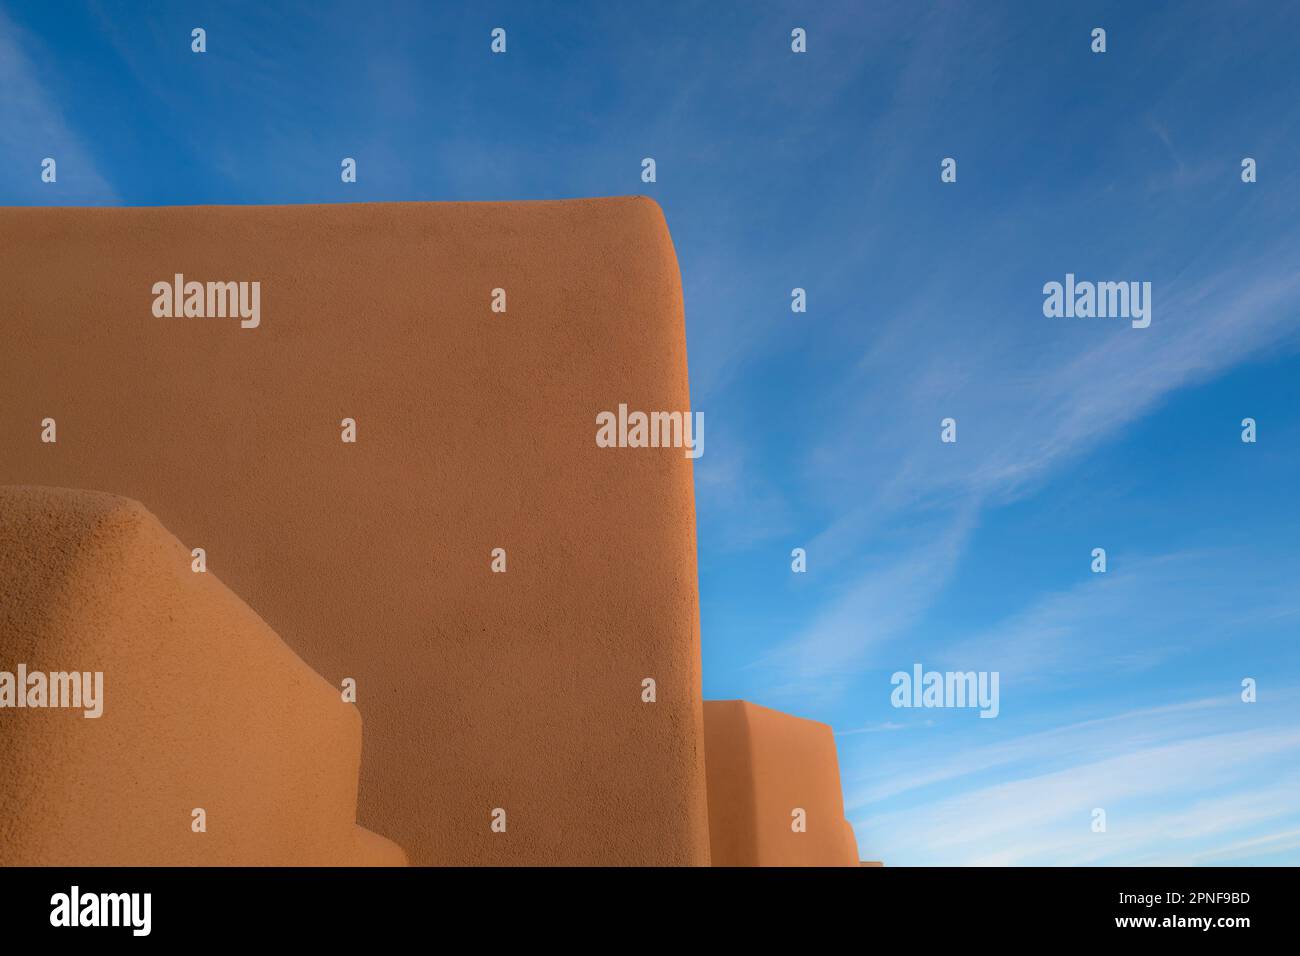 United States, New Mexico, Santa Fe, Adobe style walls against blue sky Stock Photo